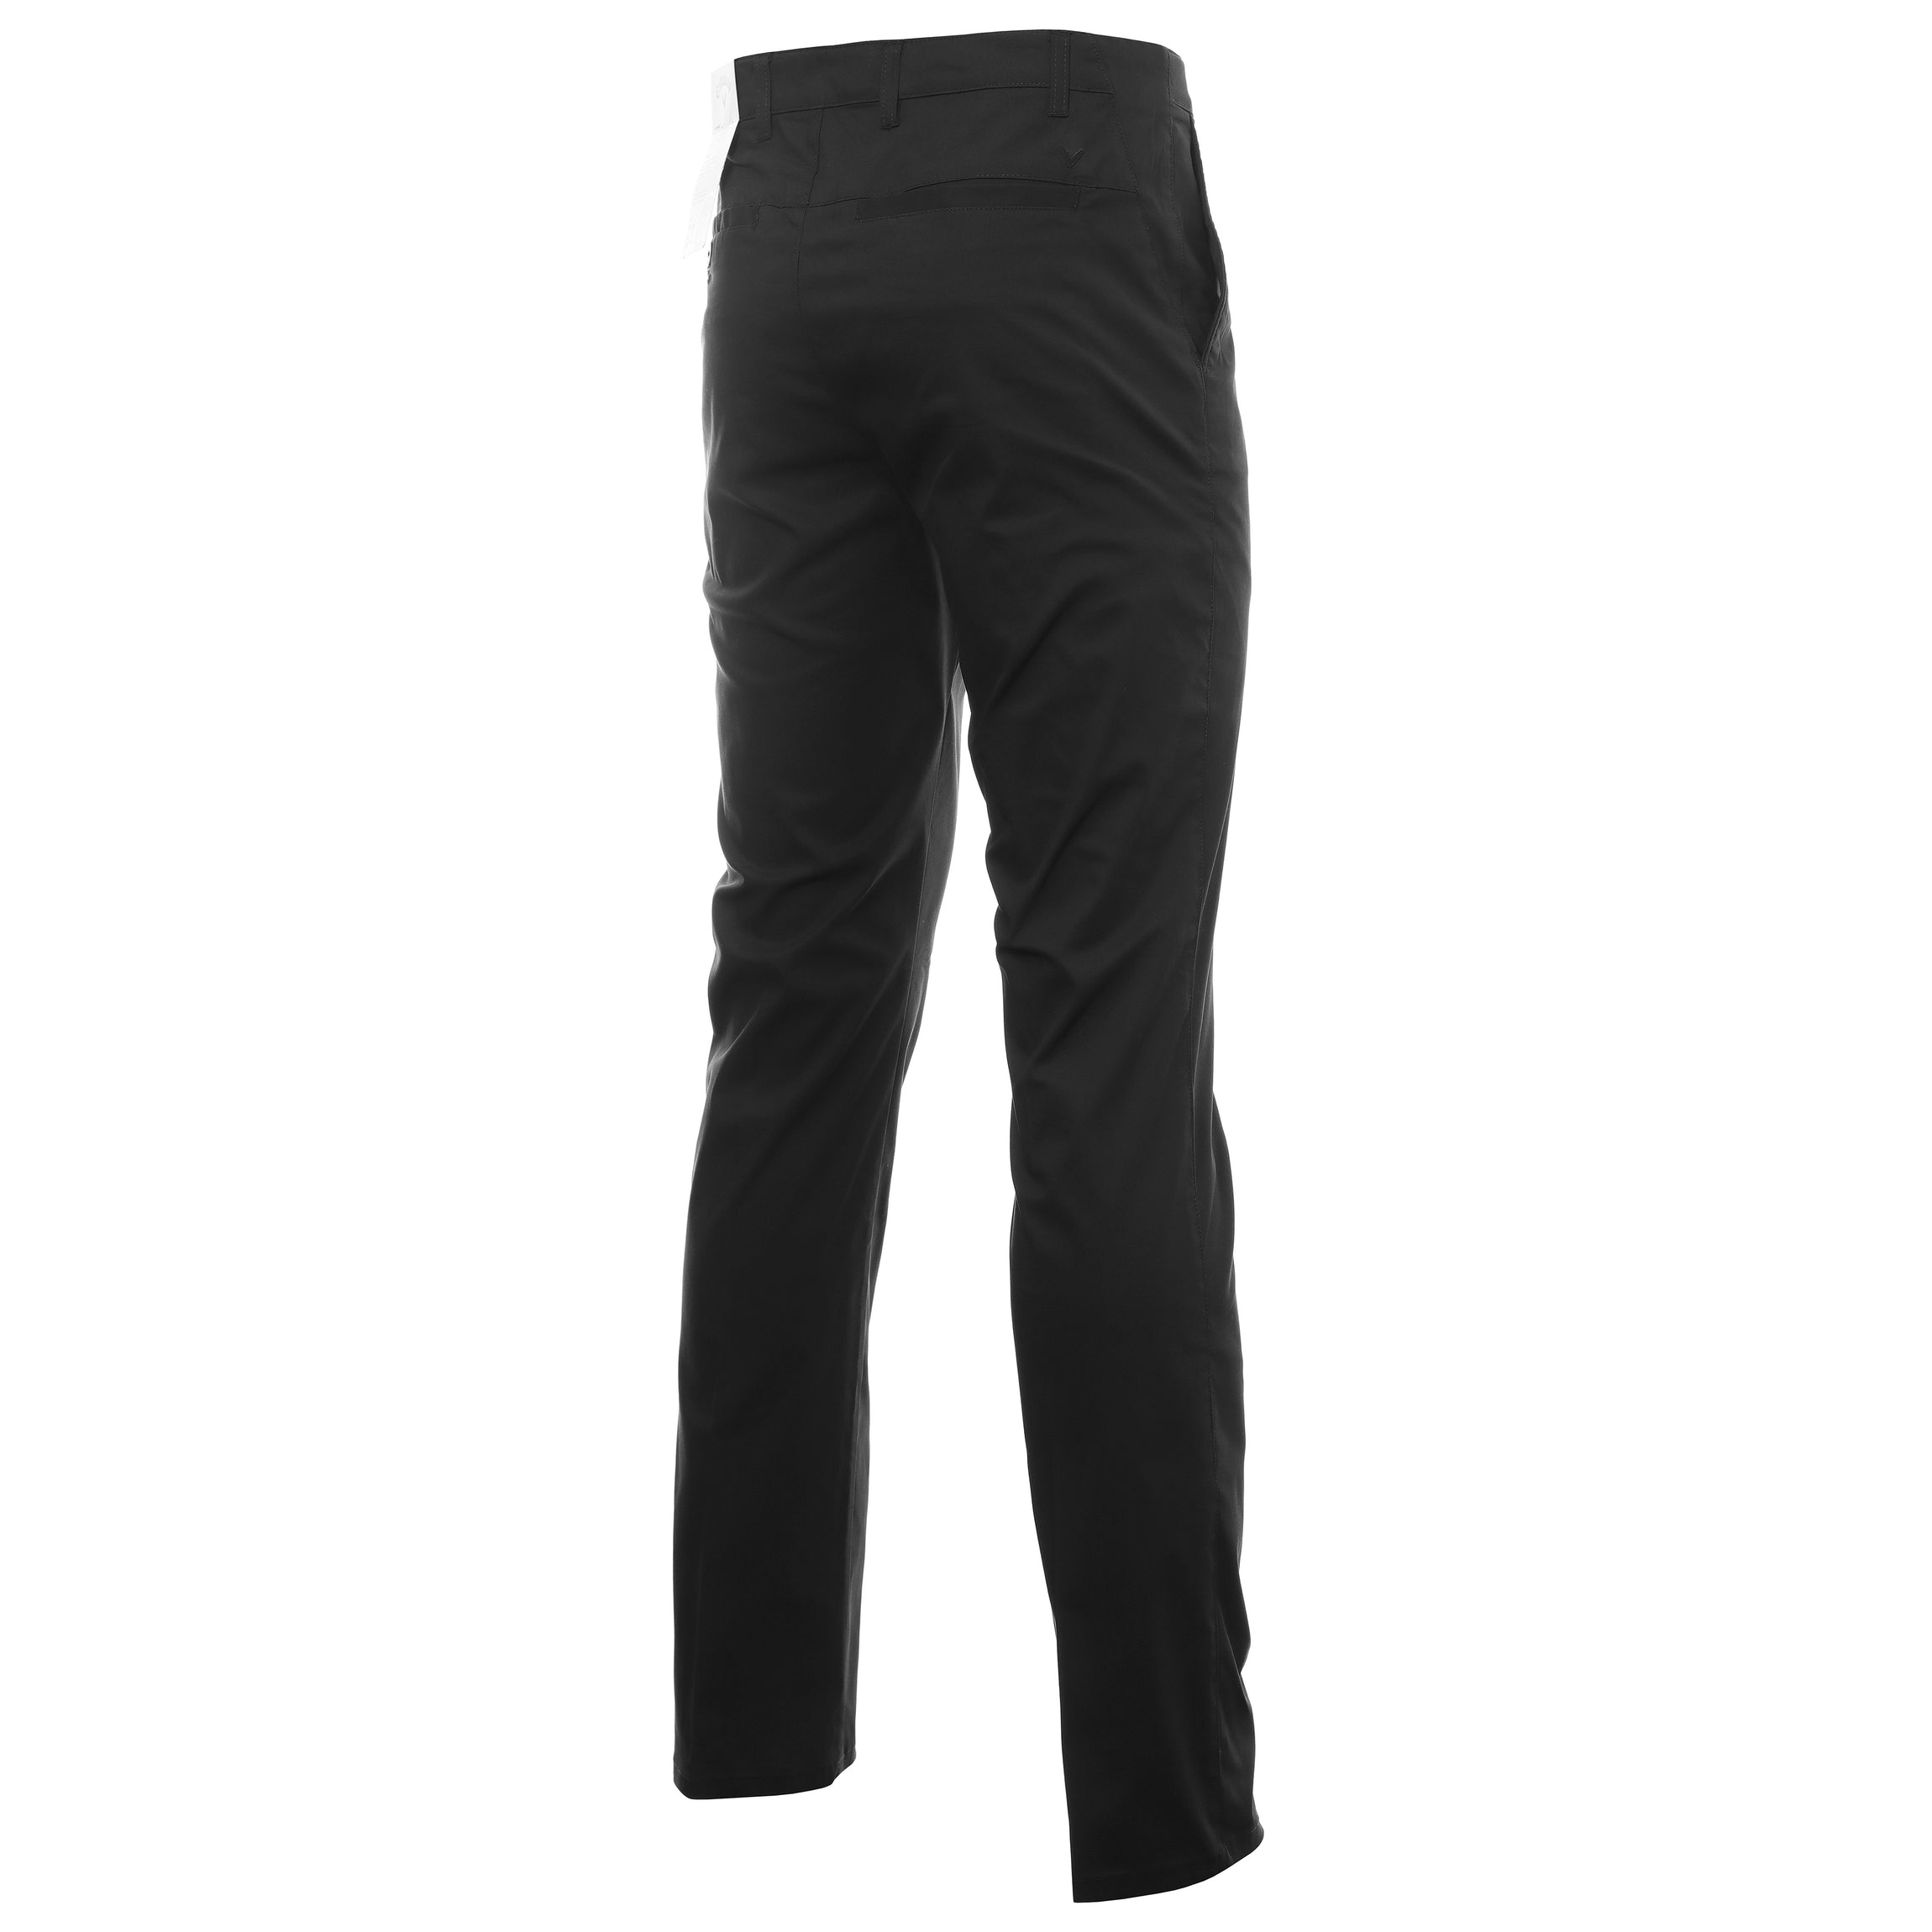 Callaway Men's Flat Front Black Golf Pants 36x32 | eBay